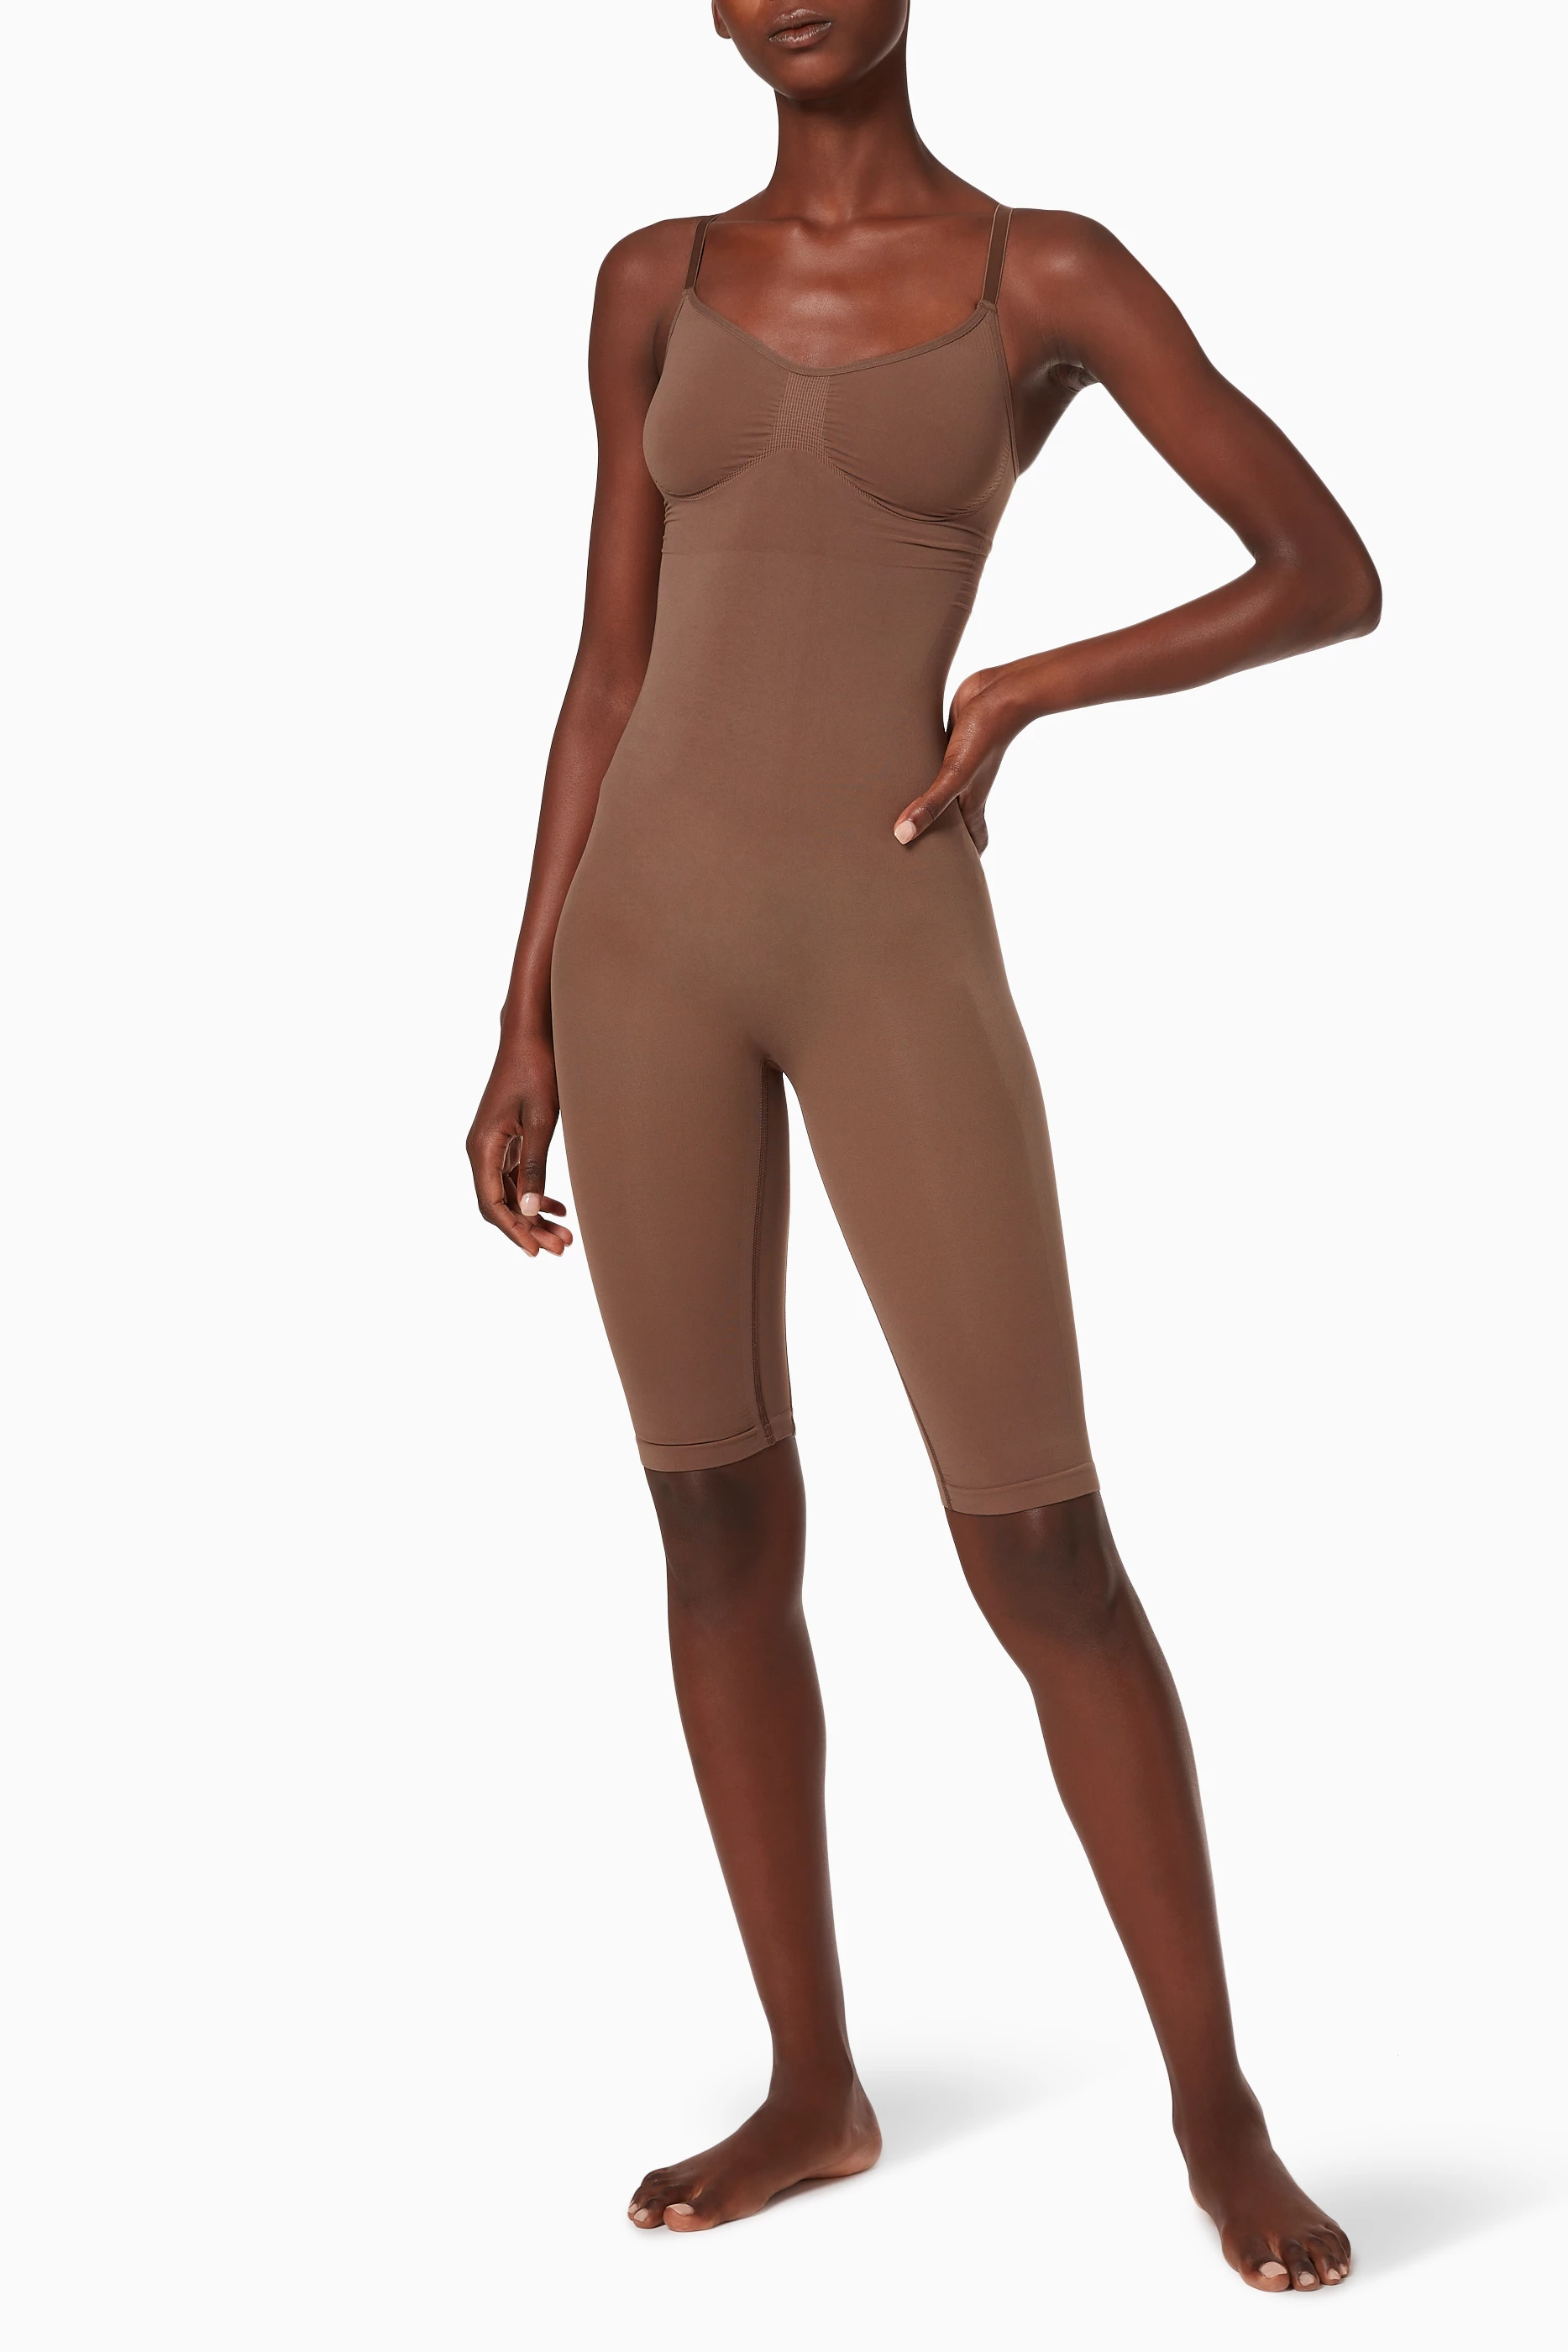 Skims Sculpting Seamless Mid-Thigh Bodysuit